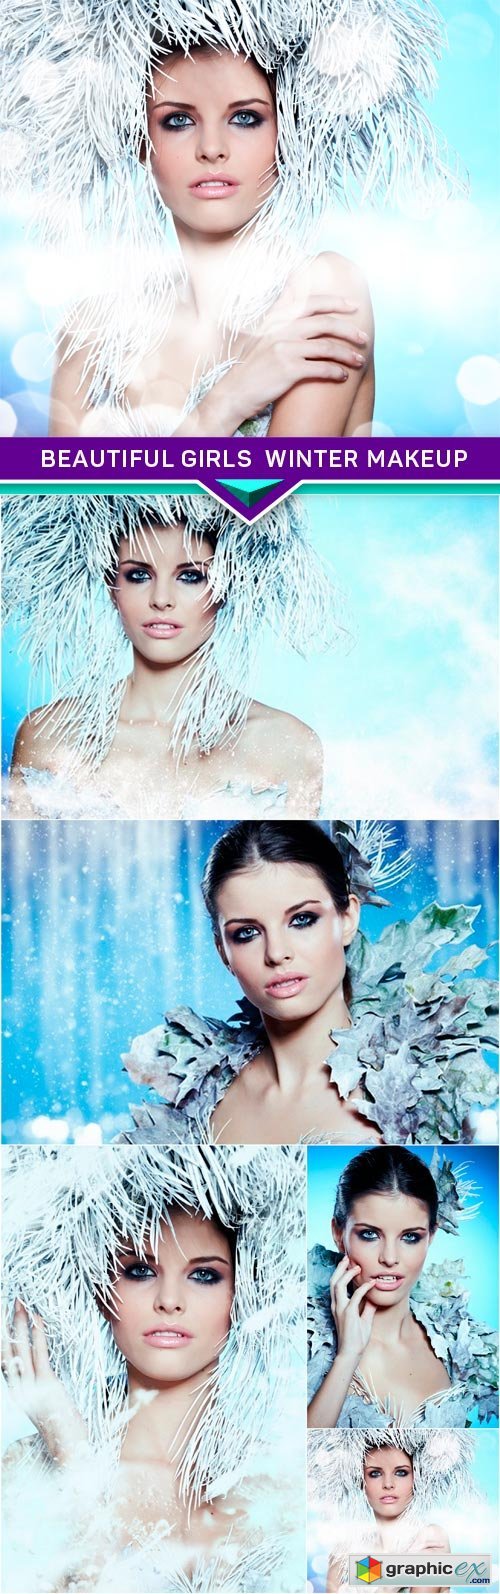 Beautiful Girls Winter Makeup 5x JPEG